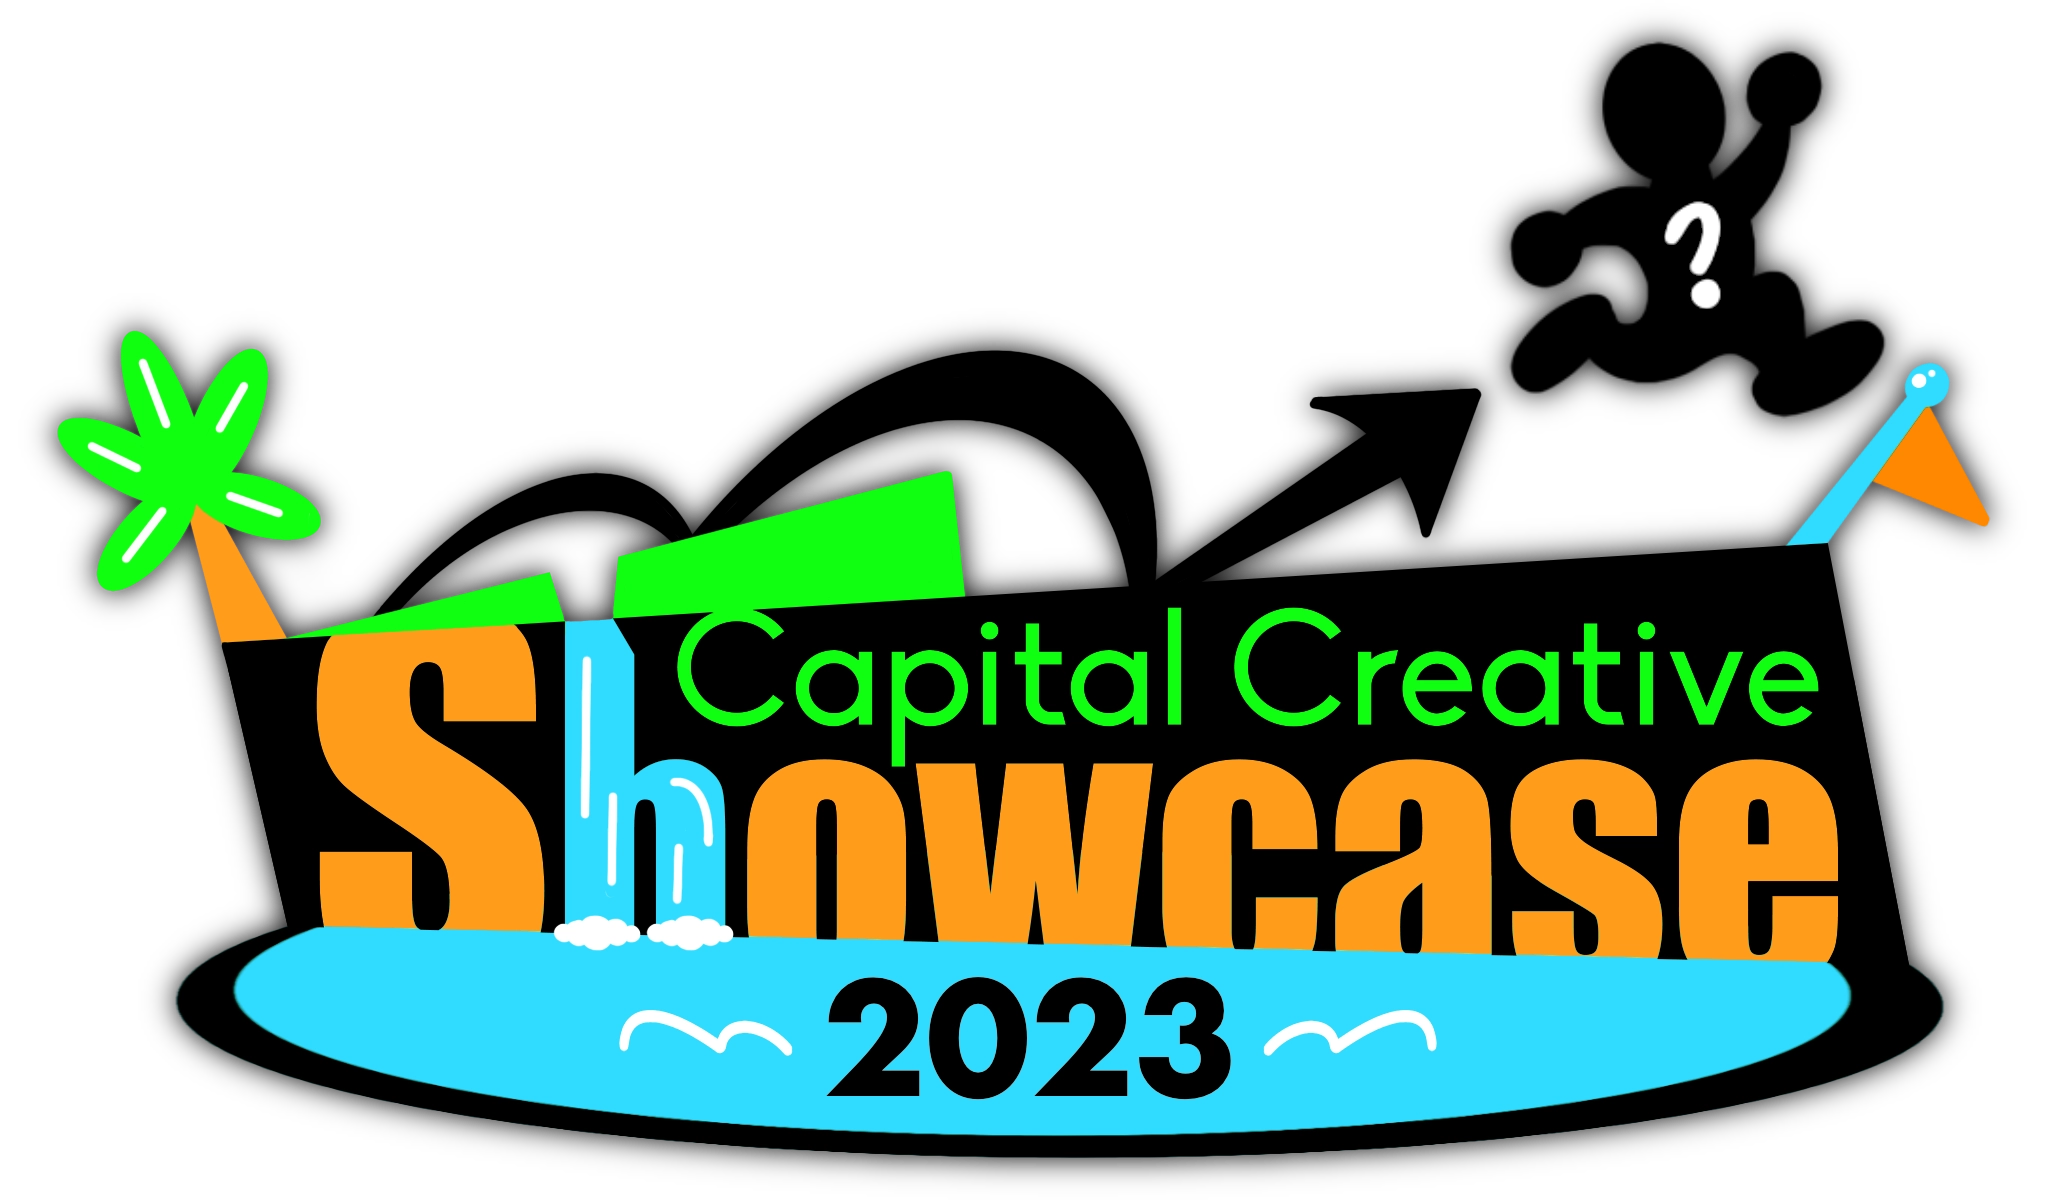 Capital Creative Showcase 2023